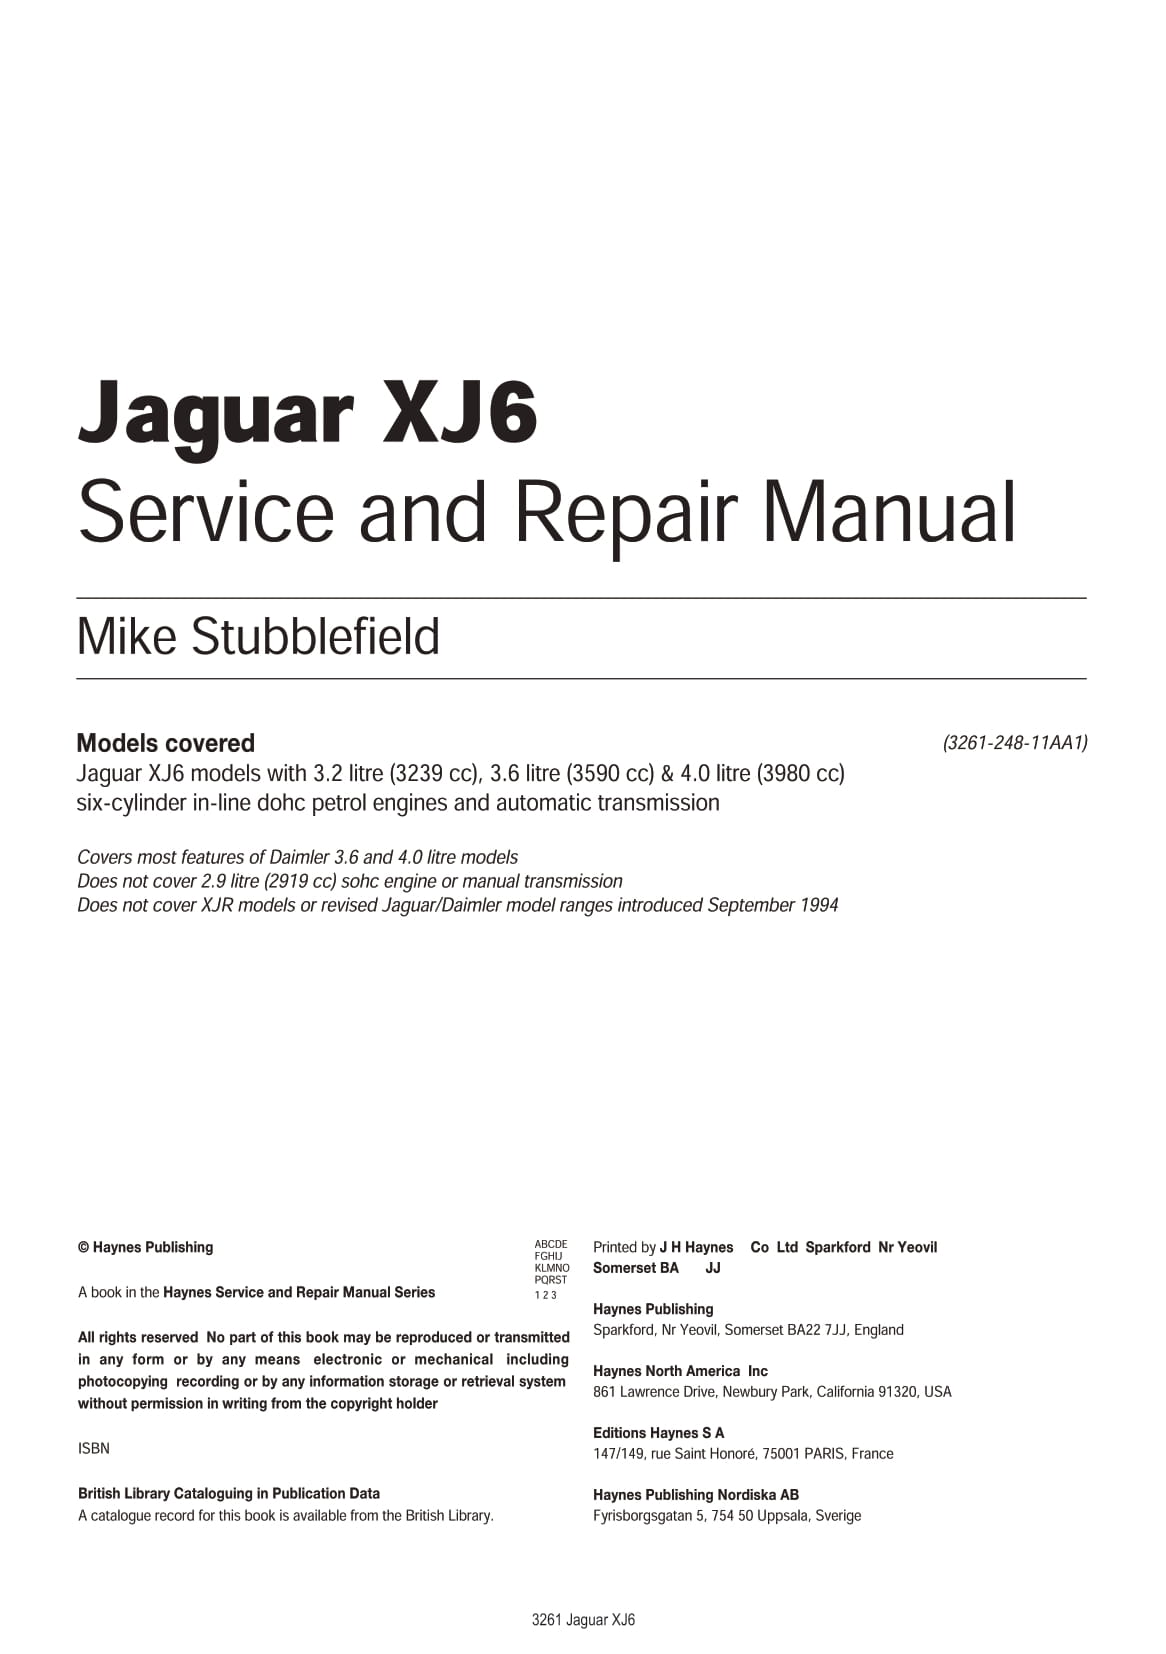 Jaguar Service and Repair Bedienungsanleitung XJ6